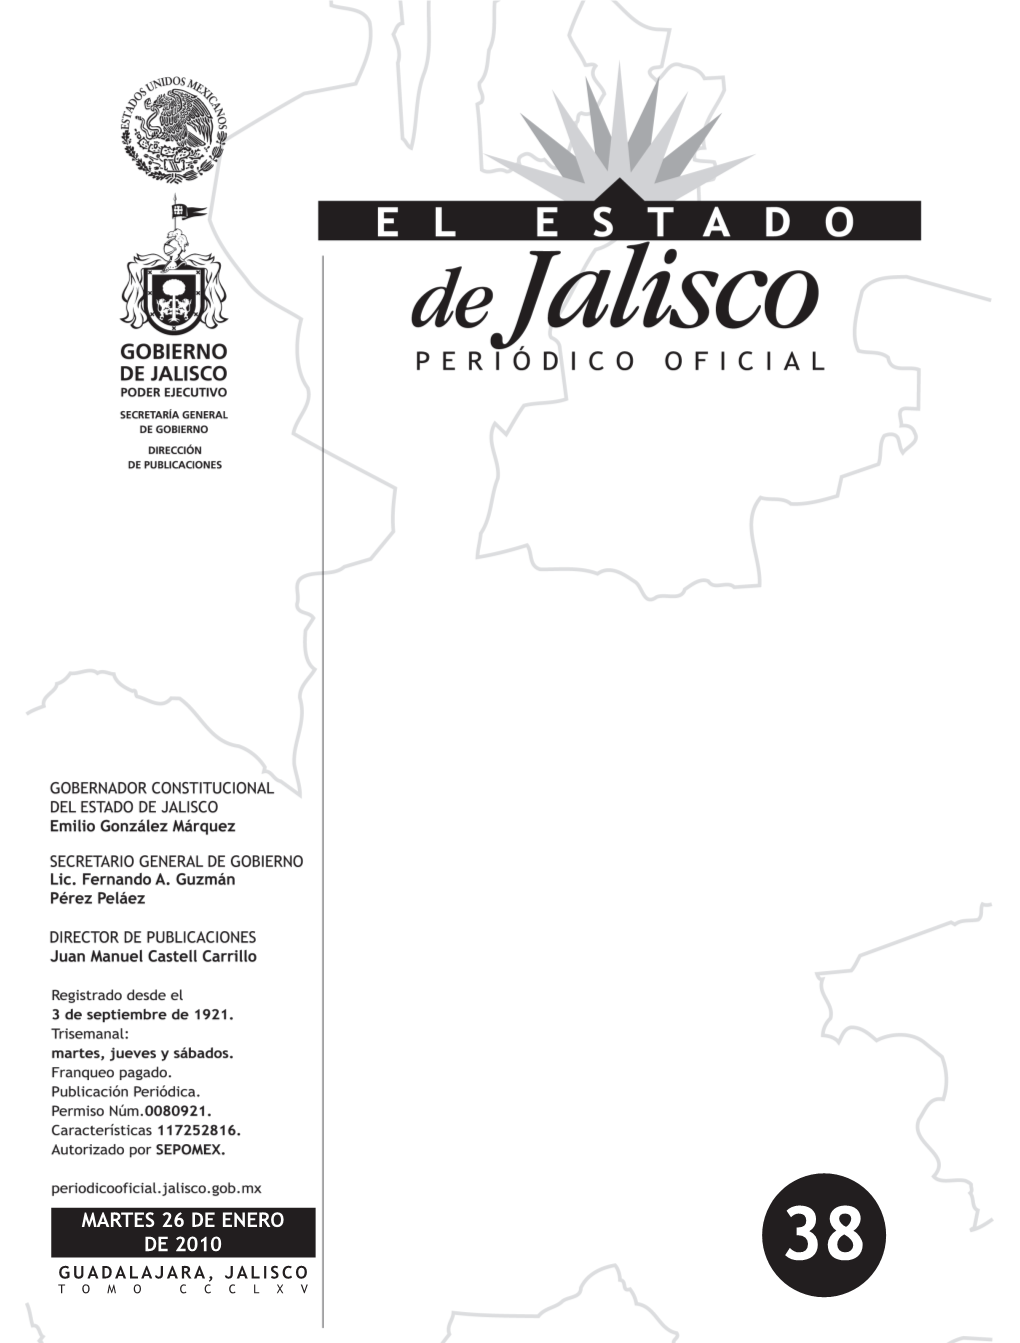 Martes 26 De Enero De 2010 38 Guadalajara, Jalisco Tomo Ccclxv Gobernador Constitucional Del Estado De Jalisco C.P